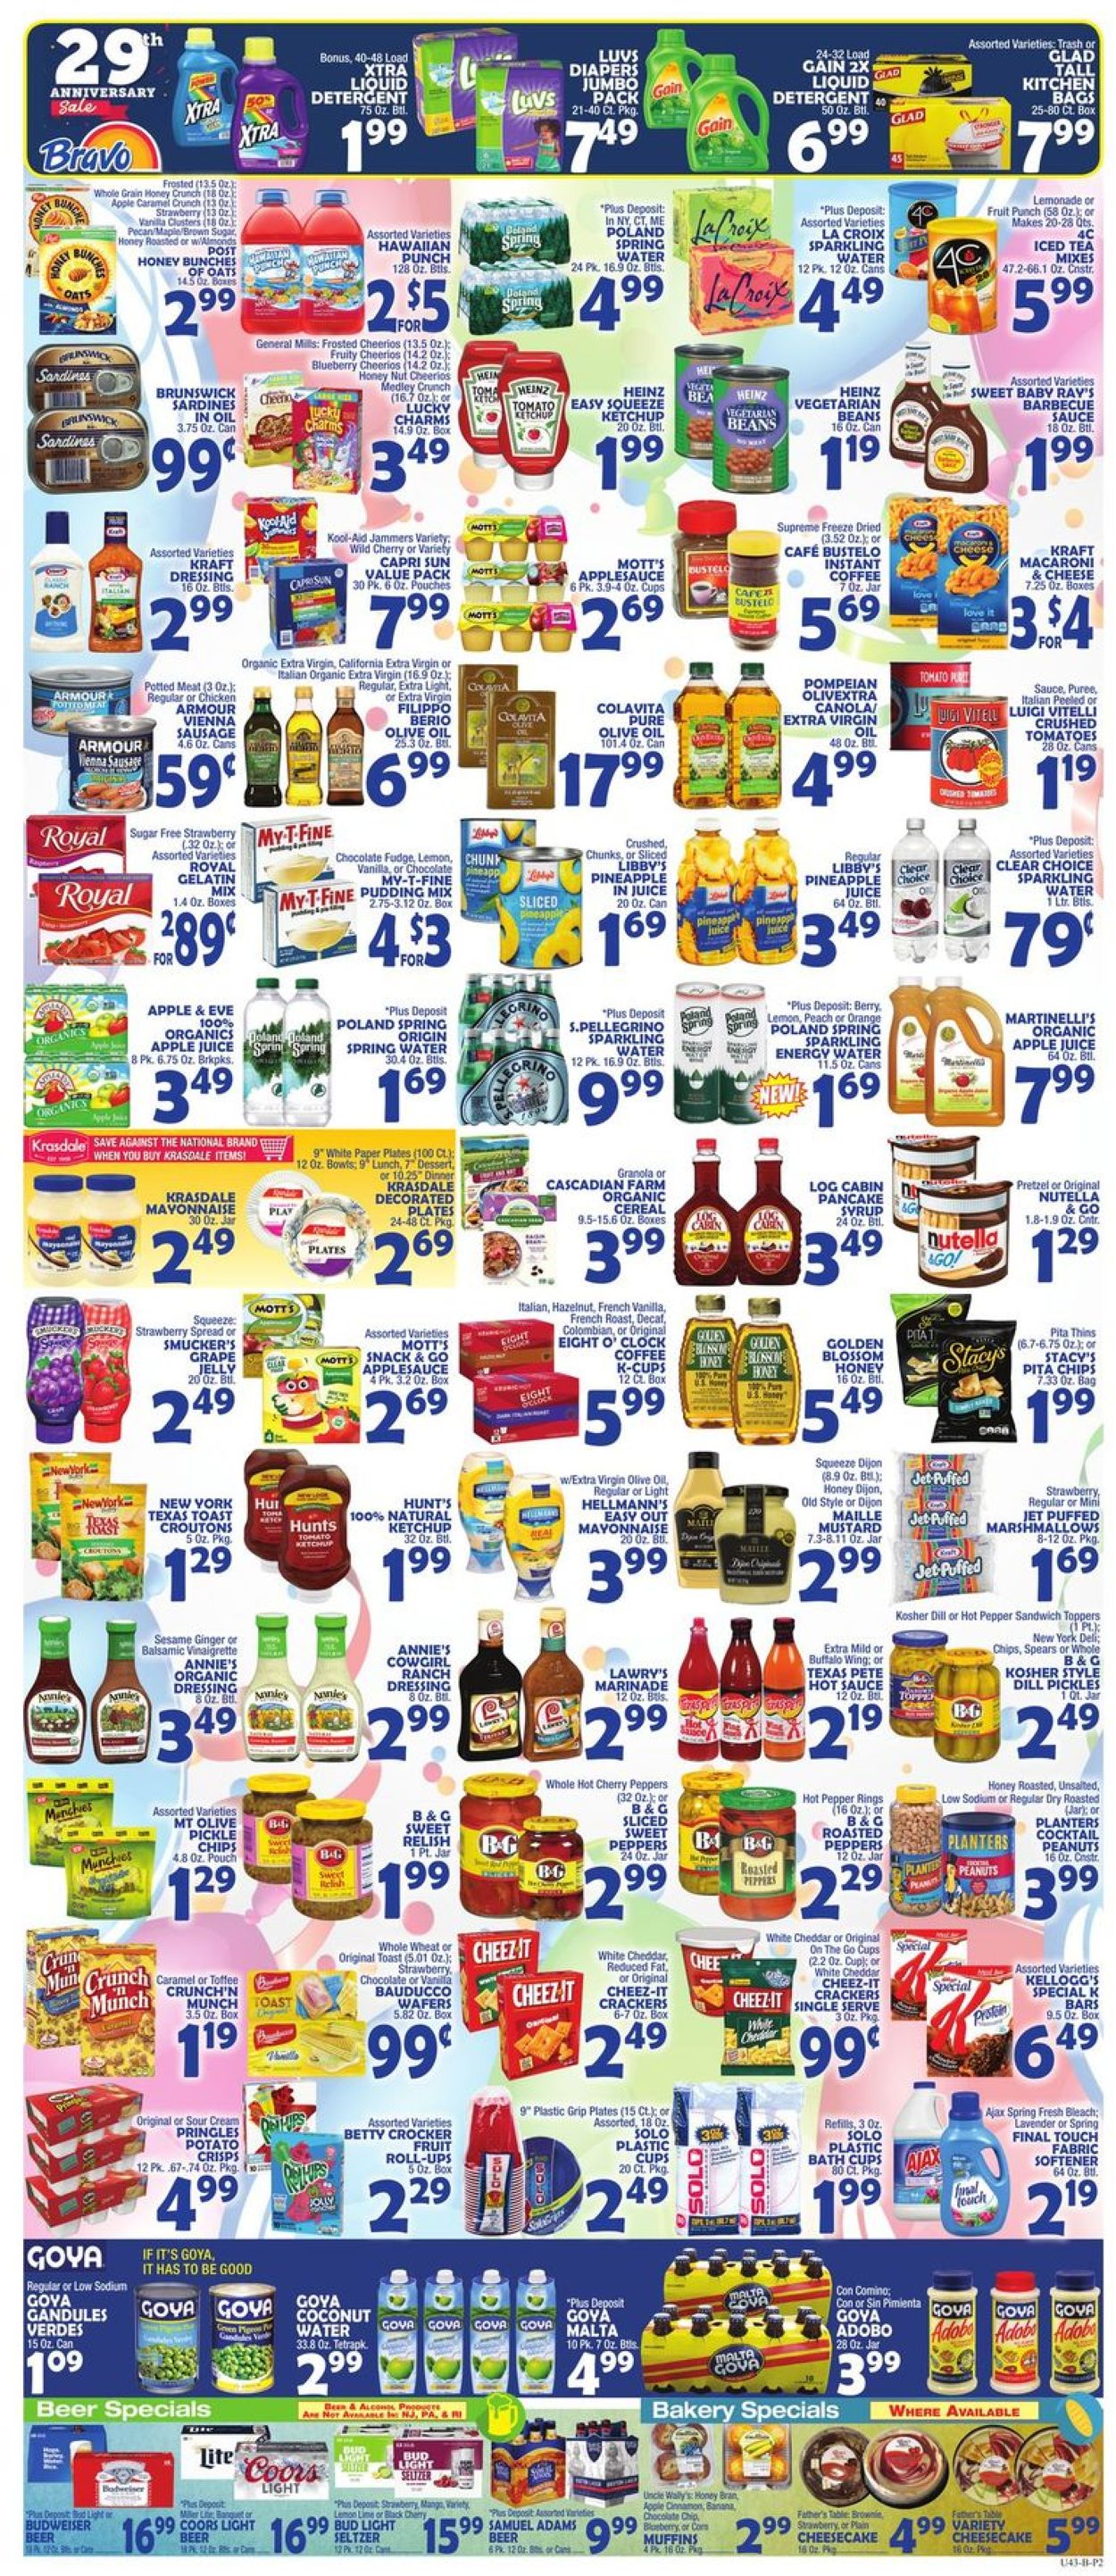 Catalogue Bravo Supermarkets from 09/04/2020